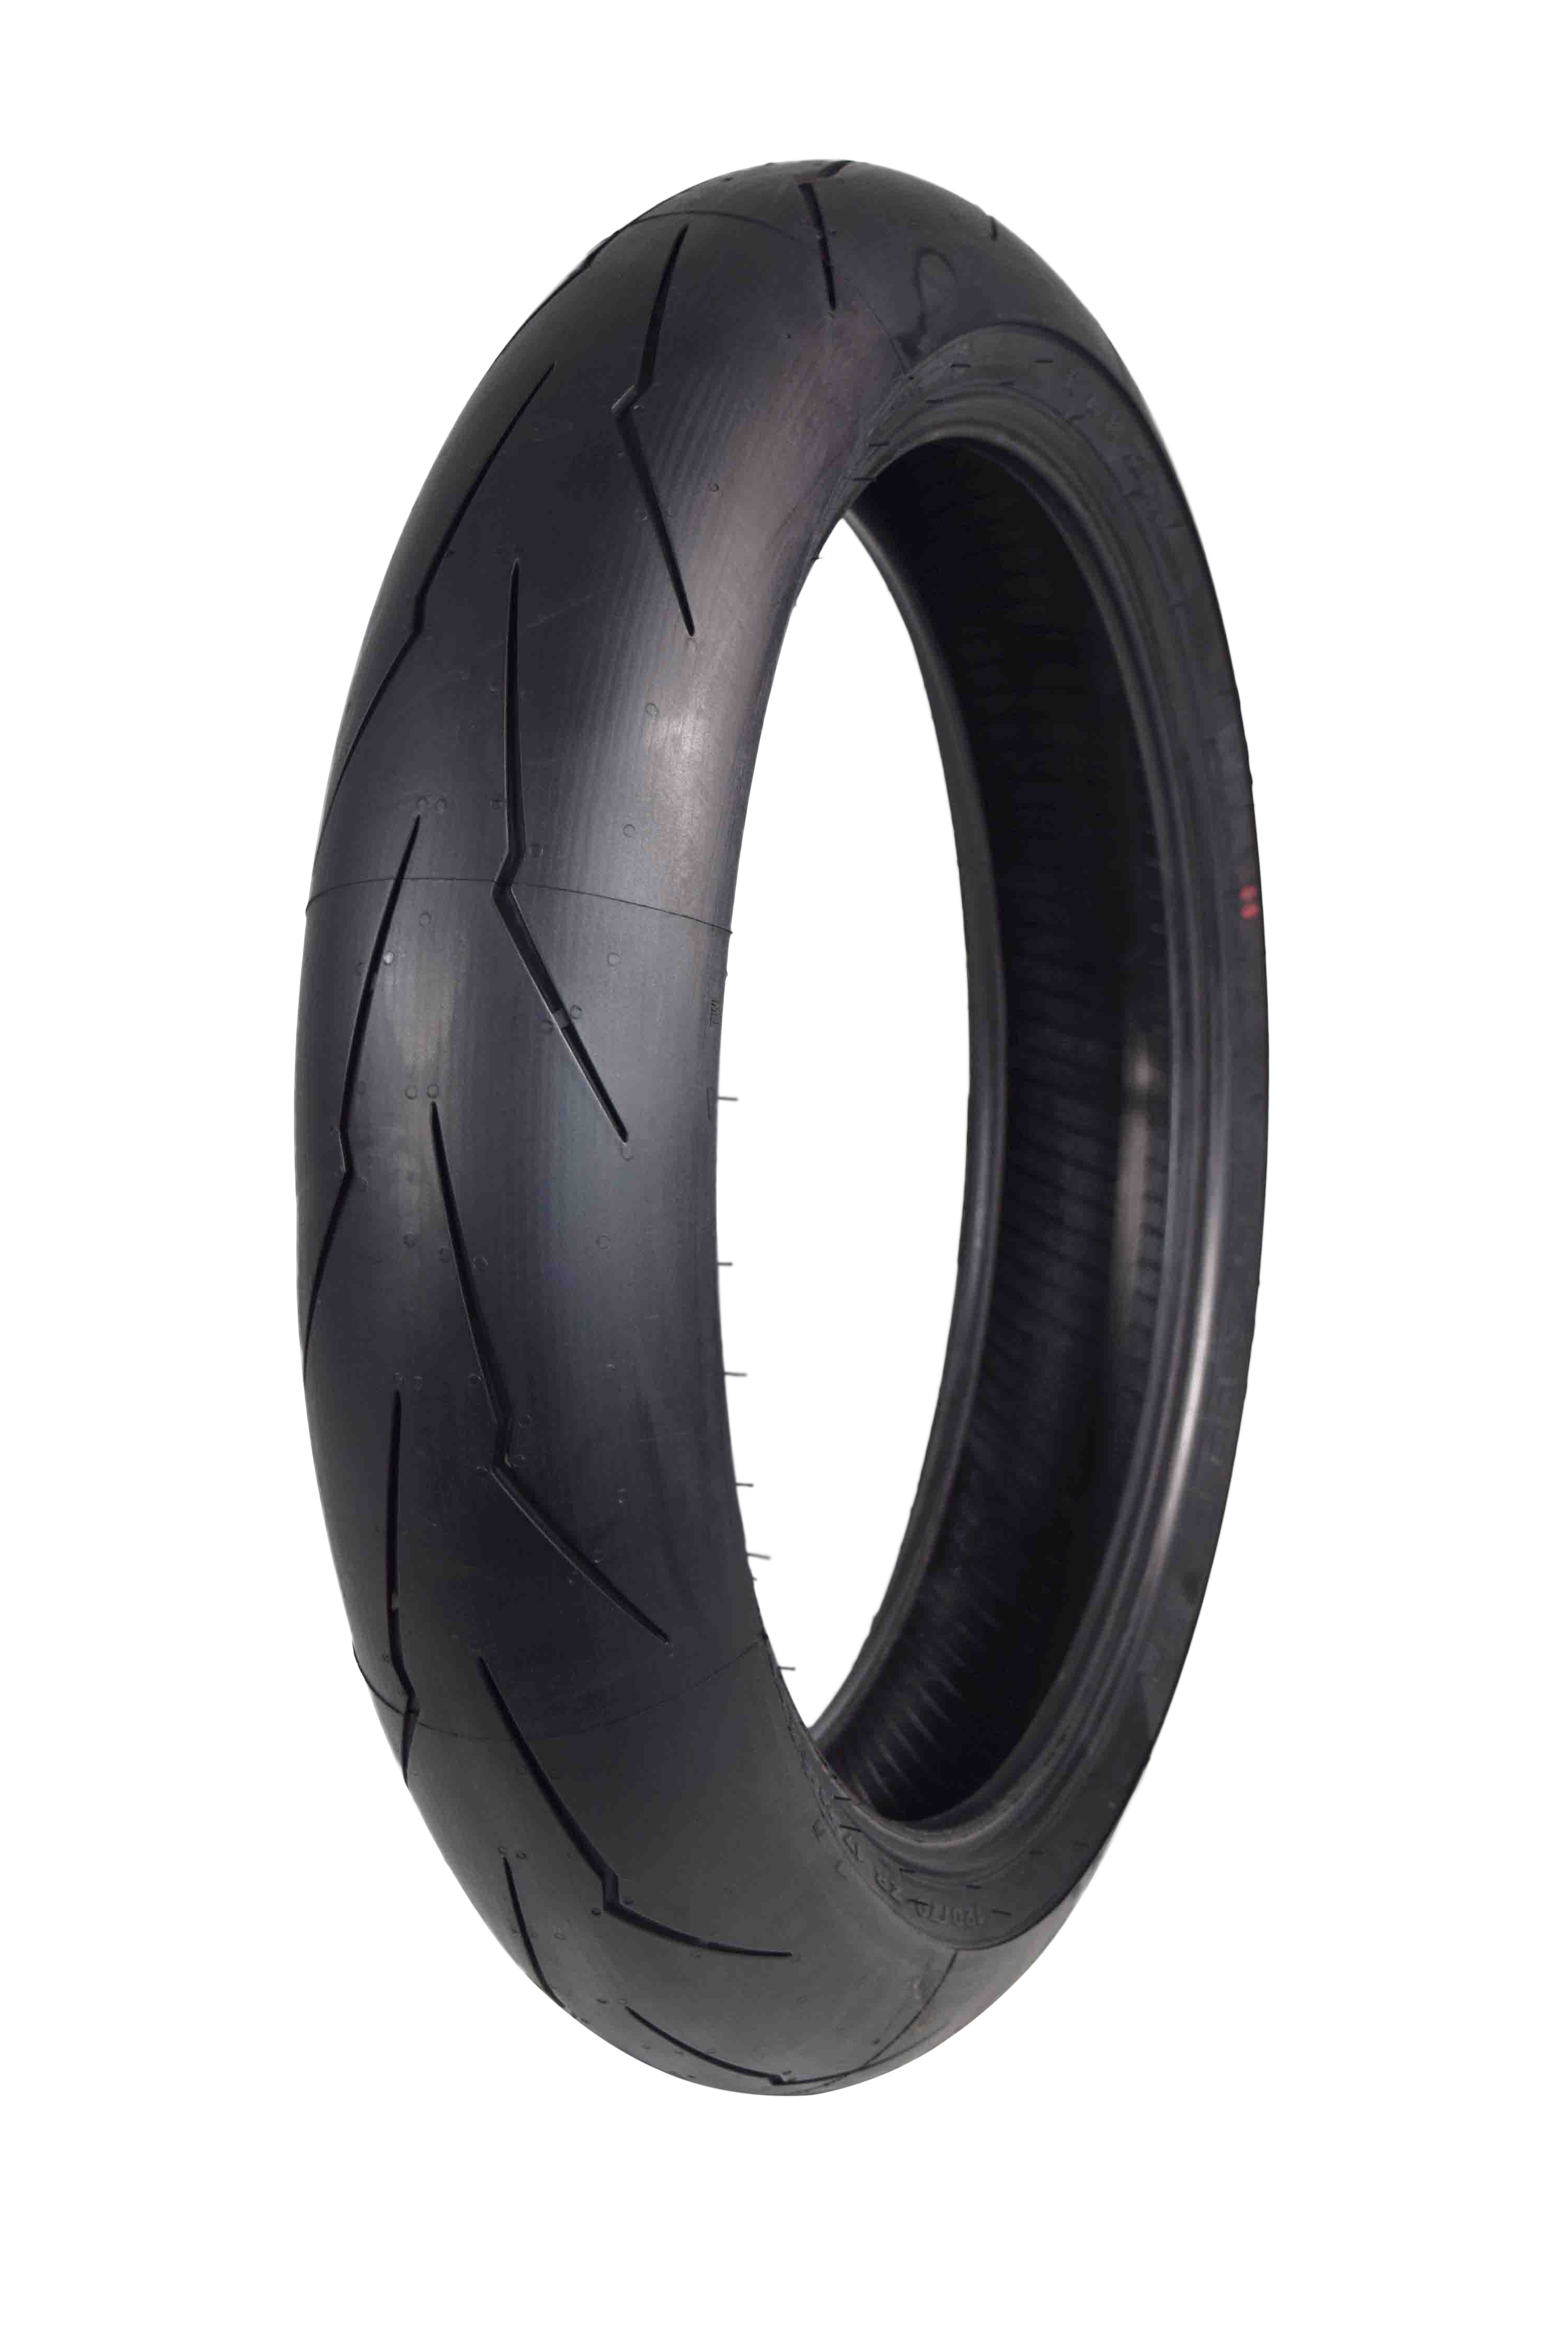 Pirelli-Tire-120-70ZR17-Front-SUPER-CORSA-V3-Motorcycle-Tire-image-2